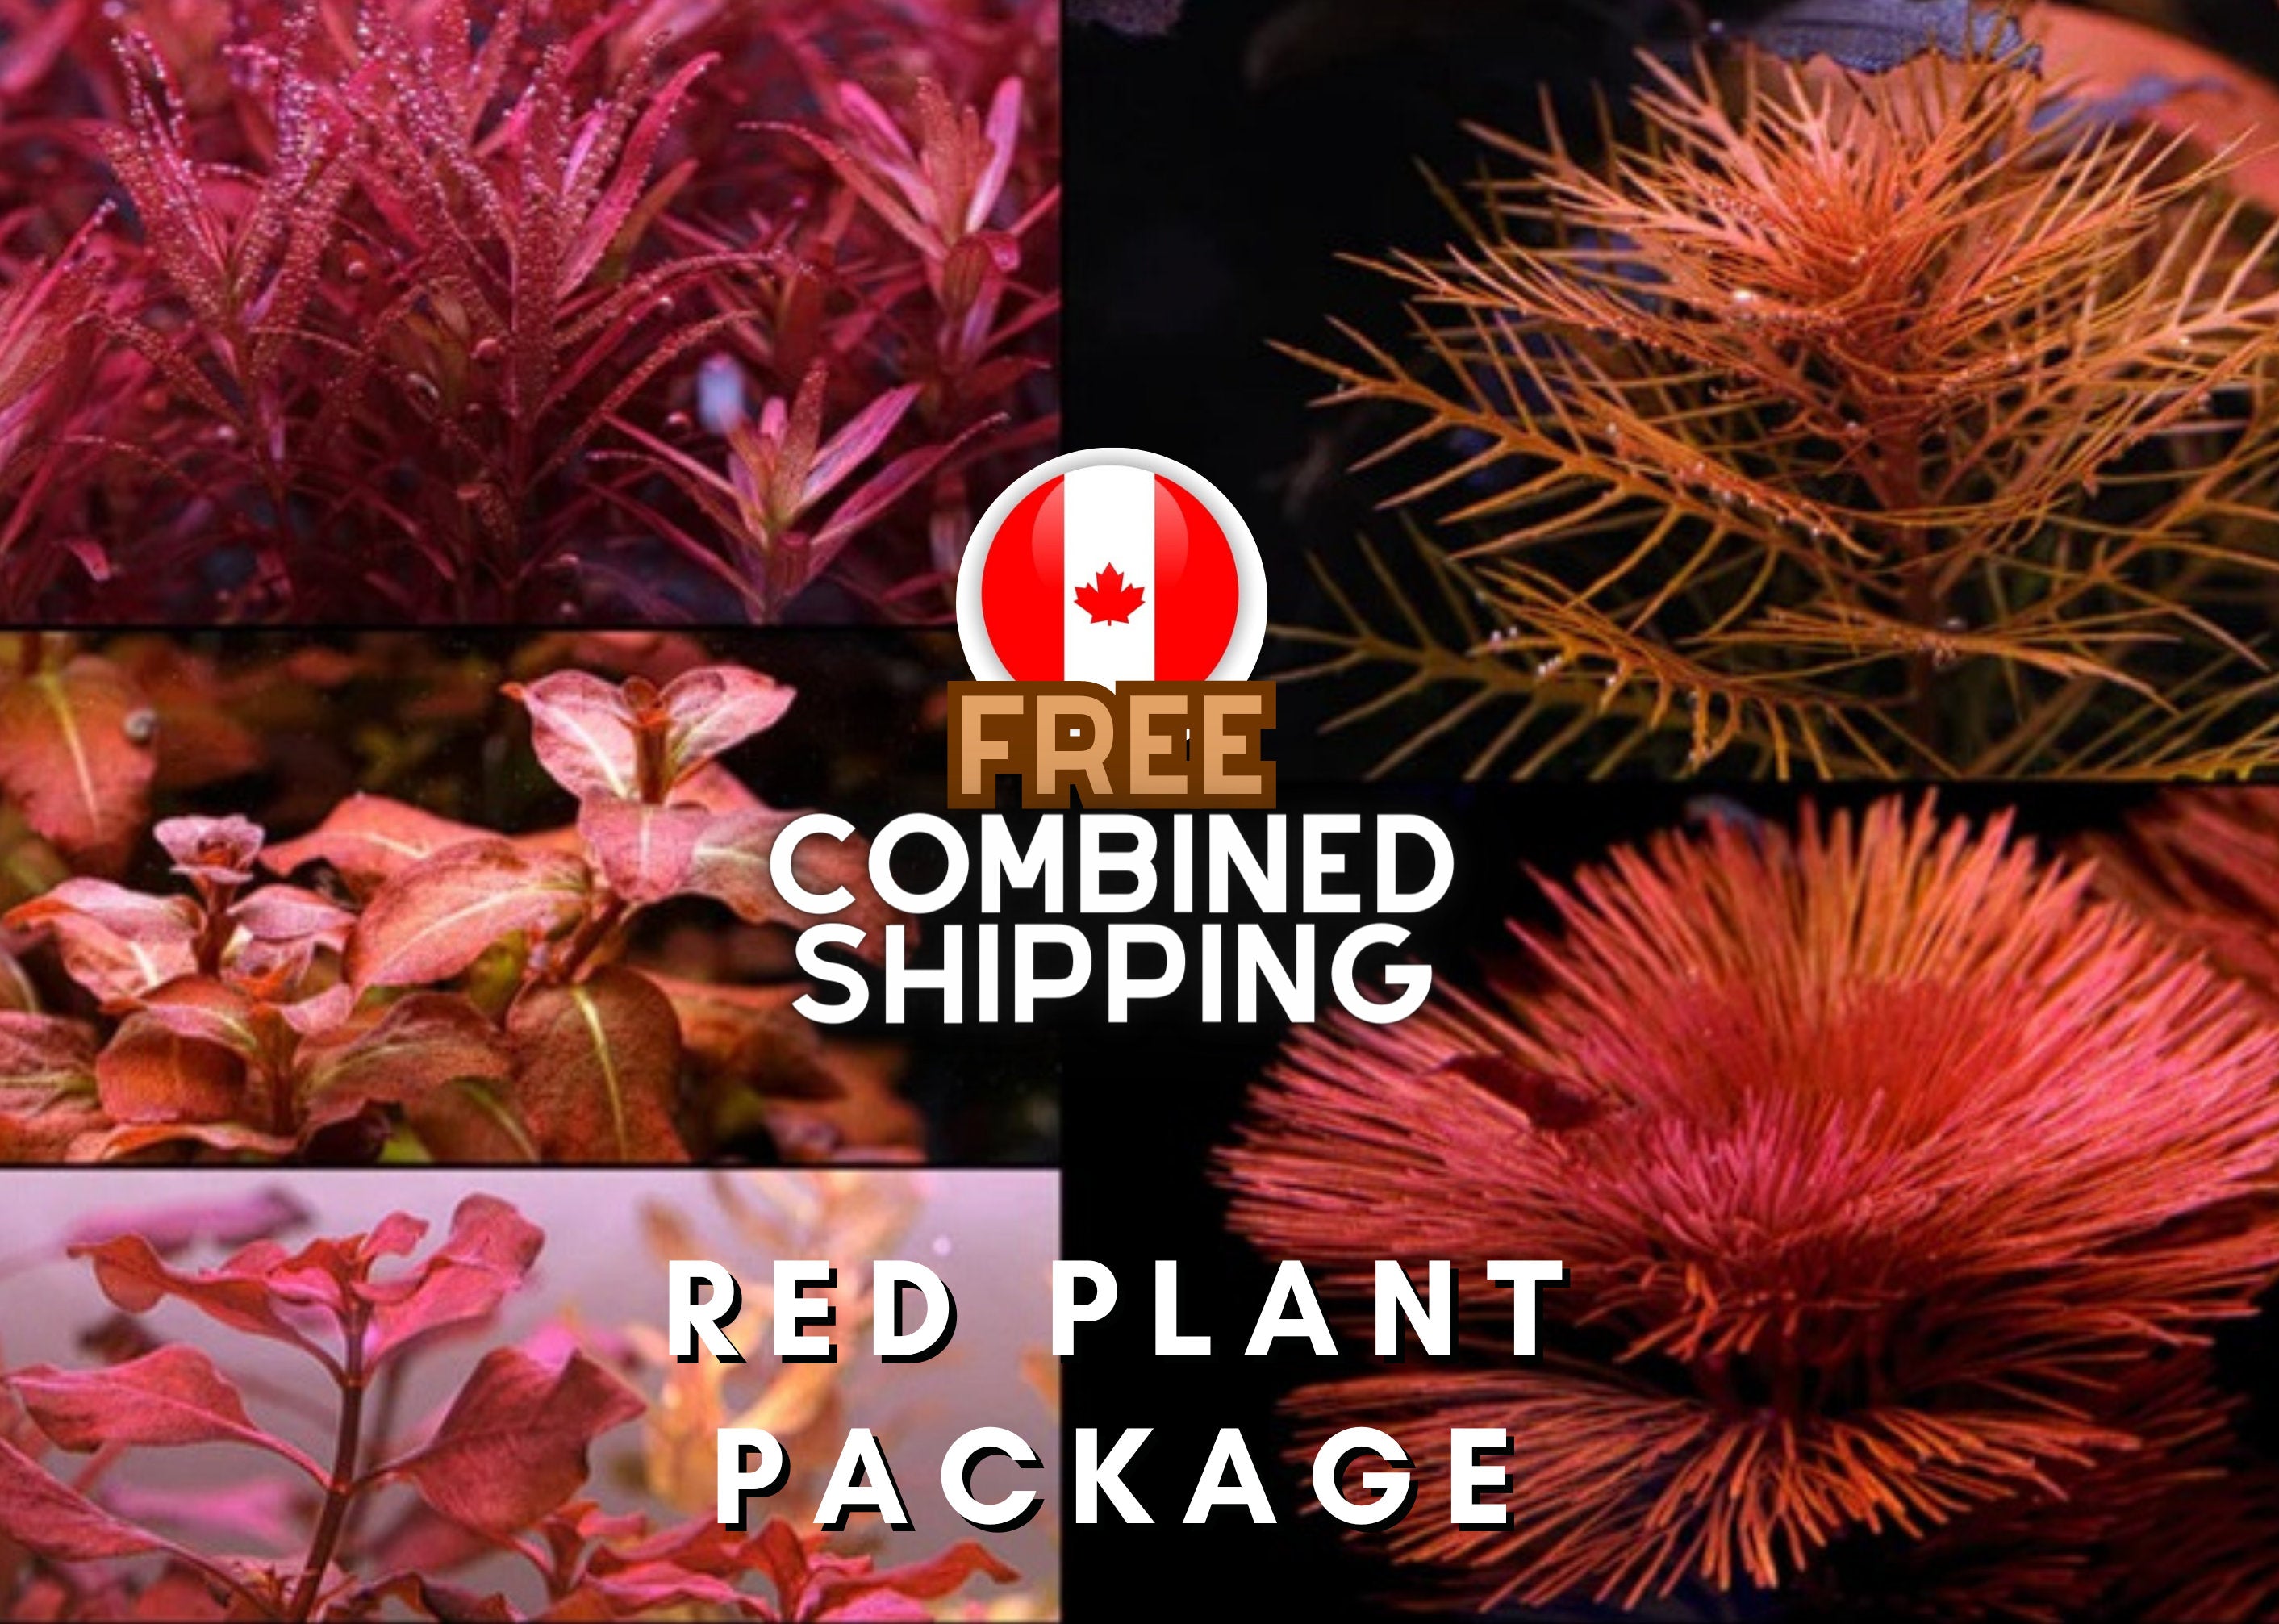 5 Red Plant package - Aquarium Plants - Aquatic Plants - Canada Seller - Combined Shipping